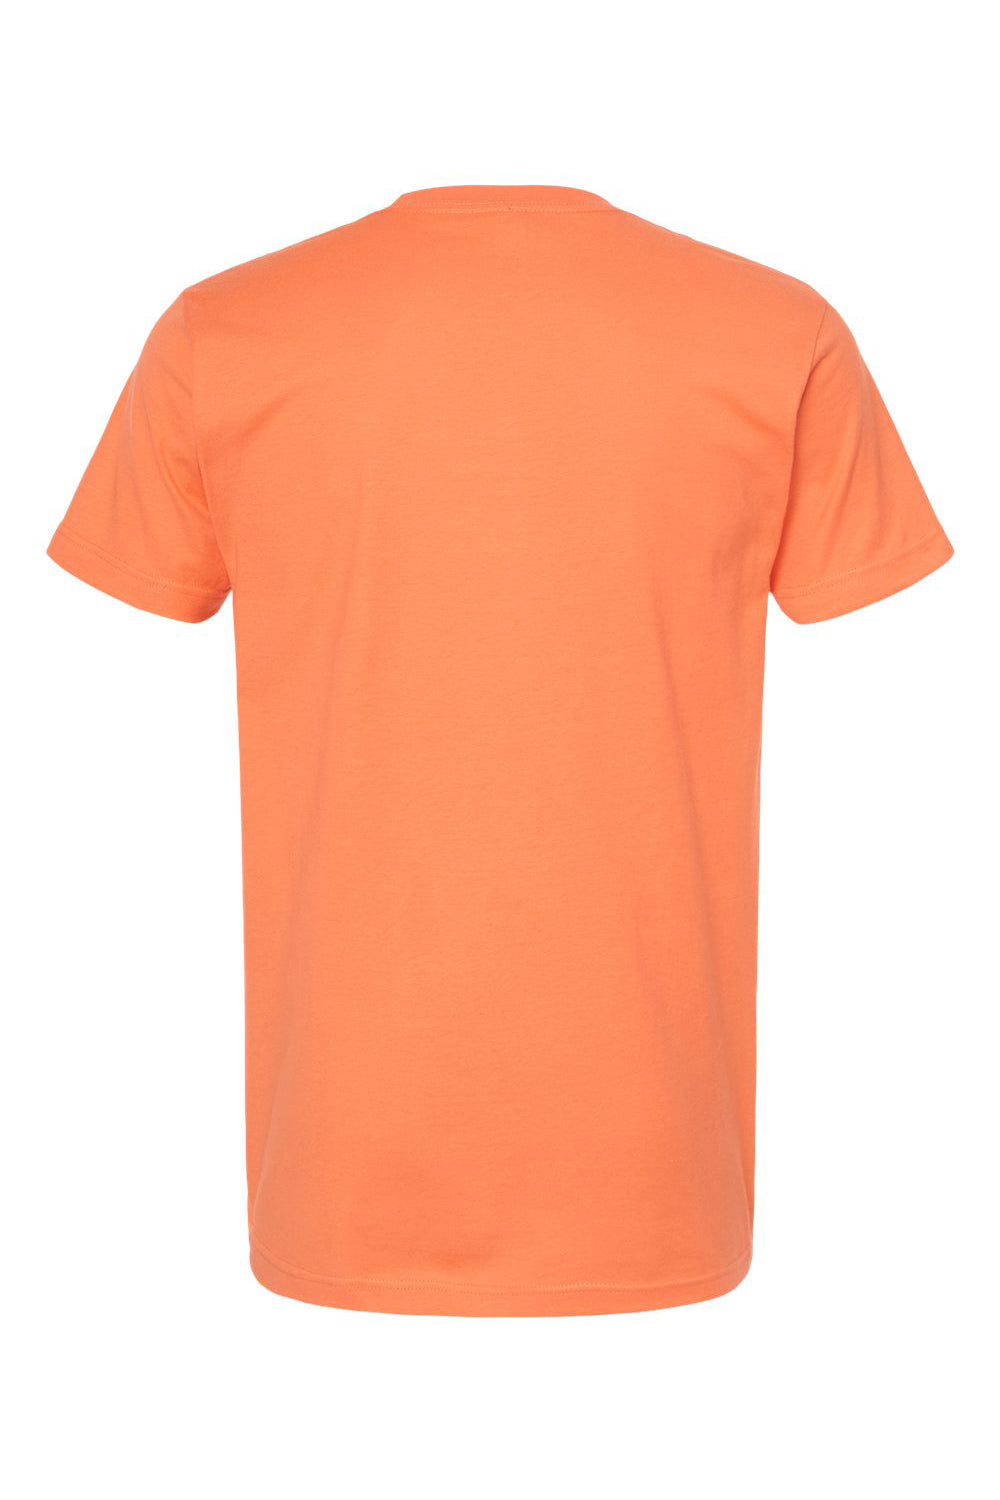 Tultex 202 Mens Fine Jersey Short Sleeve Crewneck T-Shirt Coral Orange Flat Back